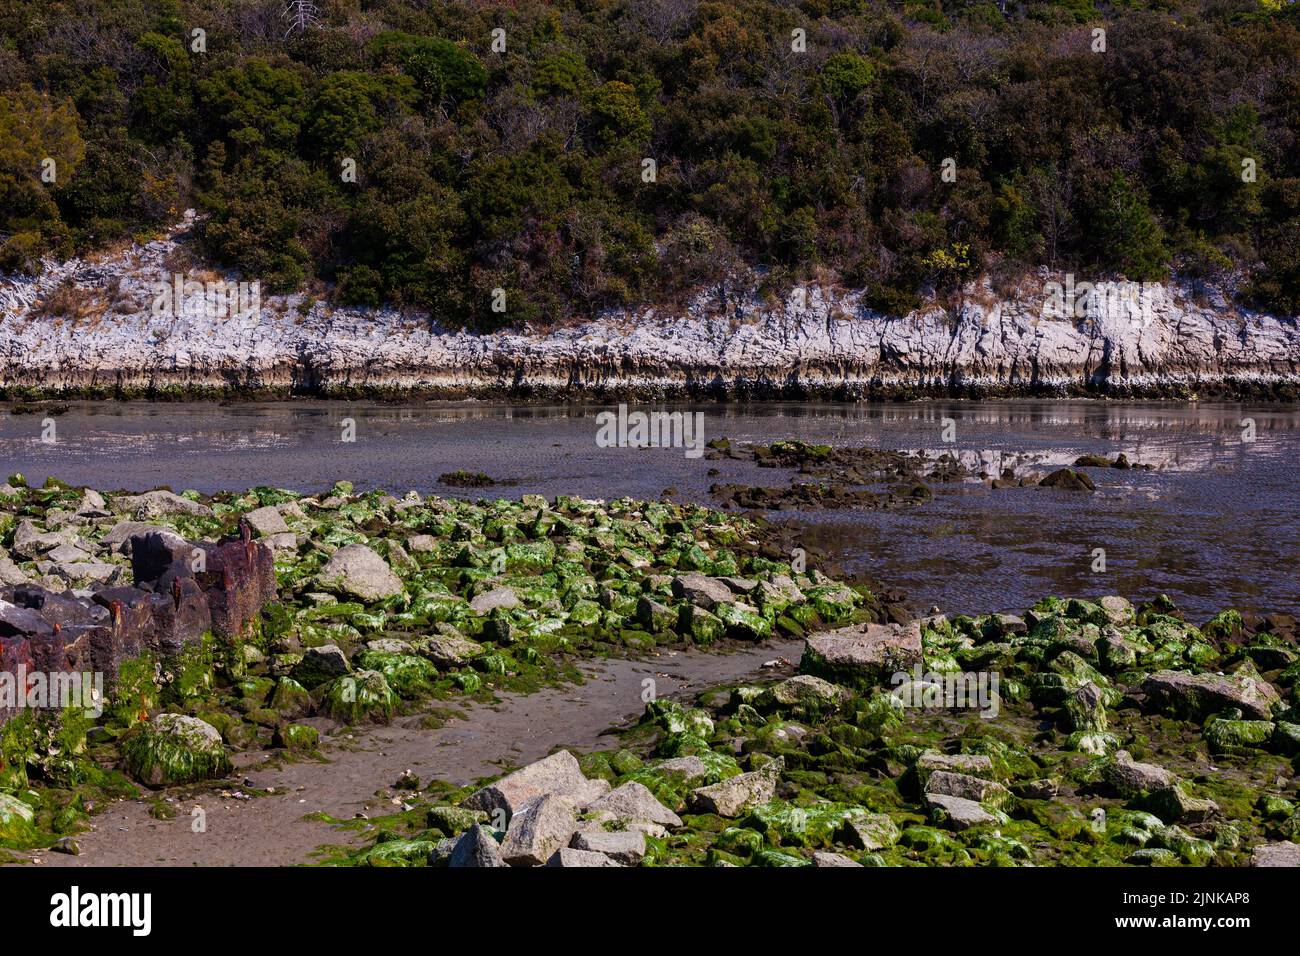 View of the Timavo river resurgences, Italy Stock Photo